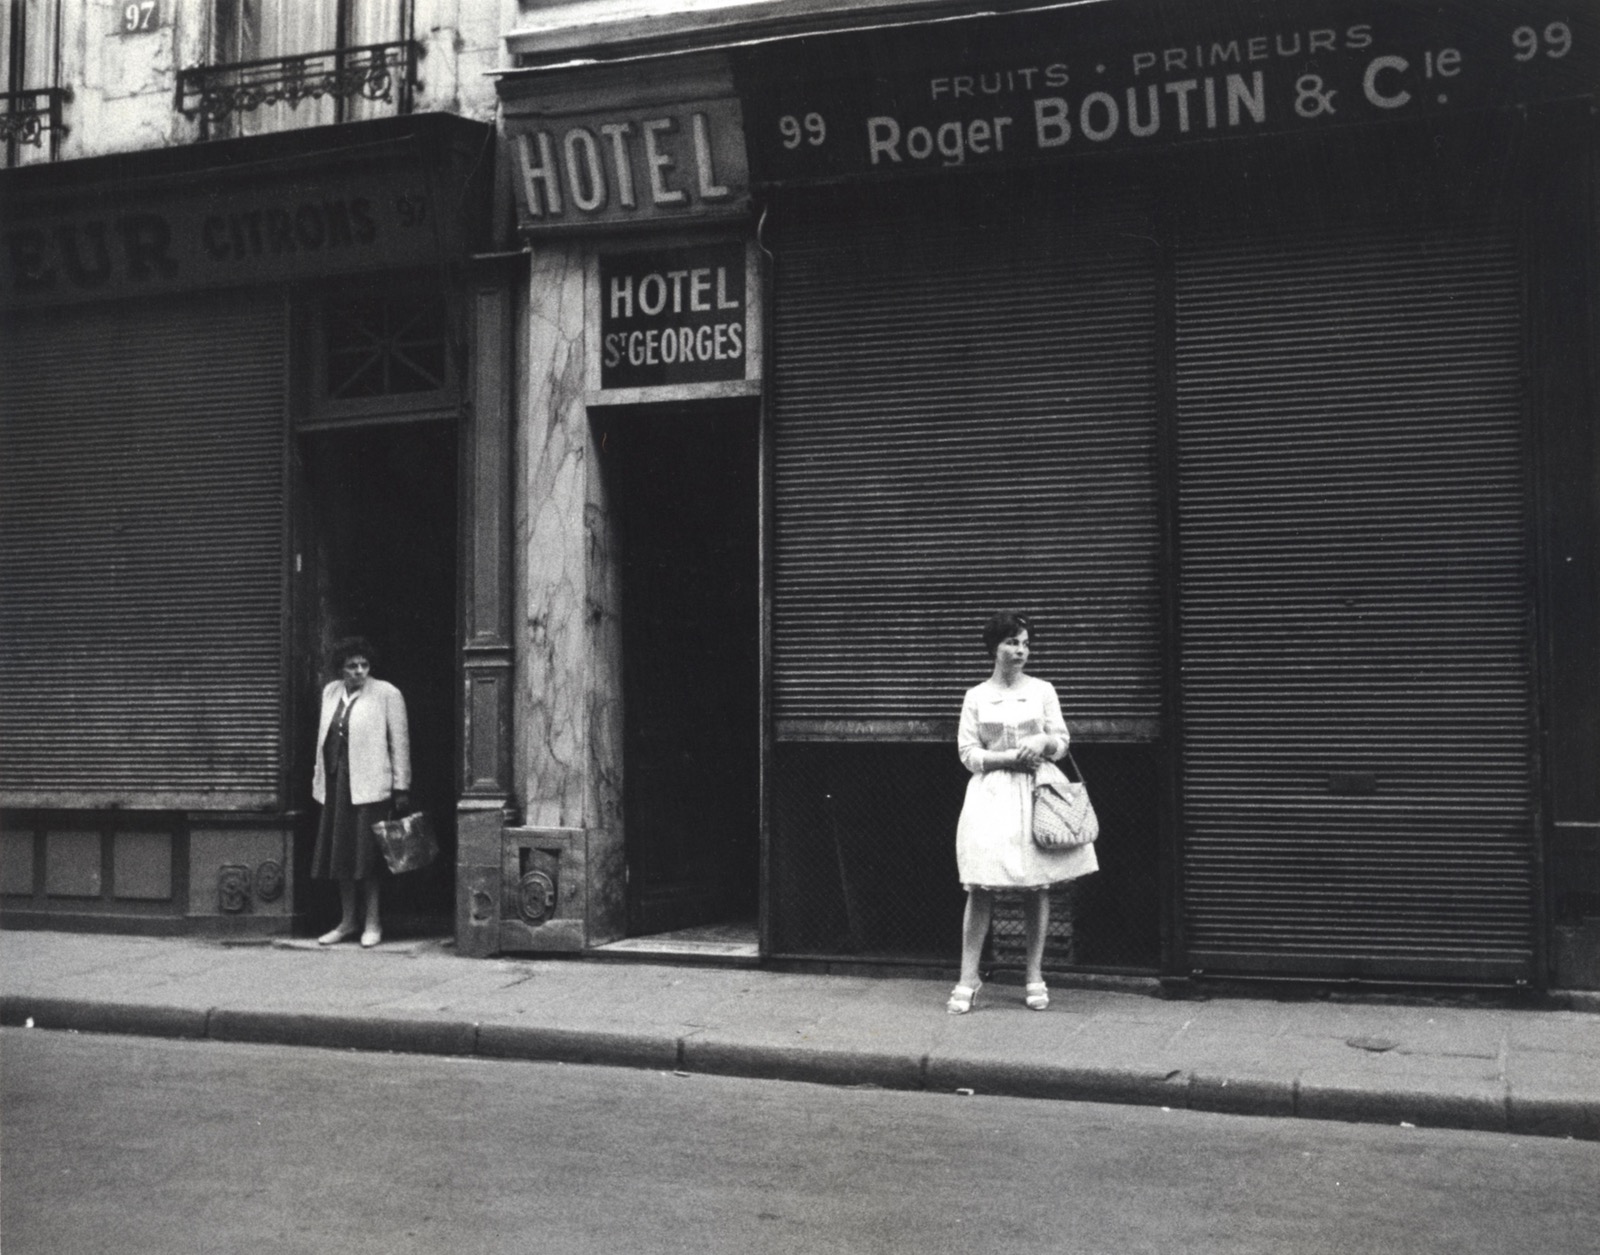 Hotel Saint Georges, Prostitution Series, Rue Saint Denis, Paris, 1960